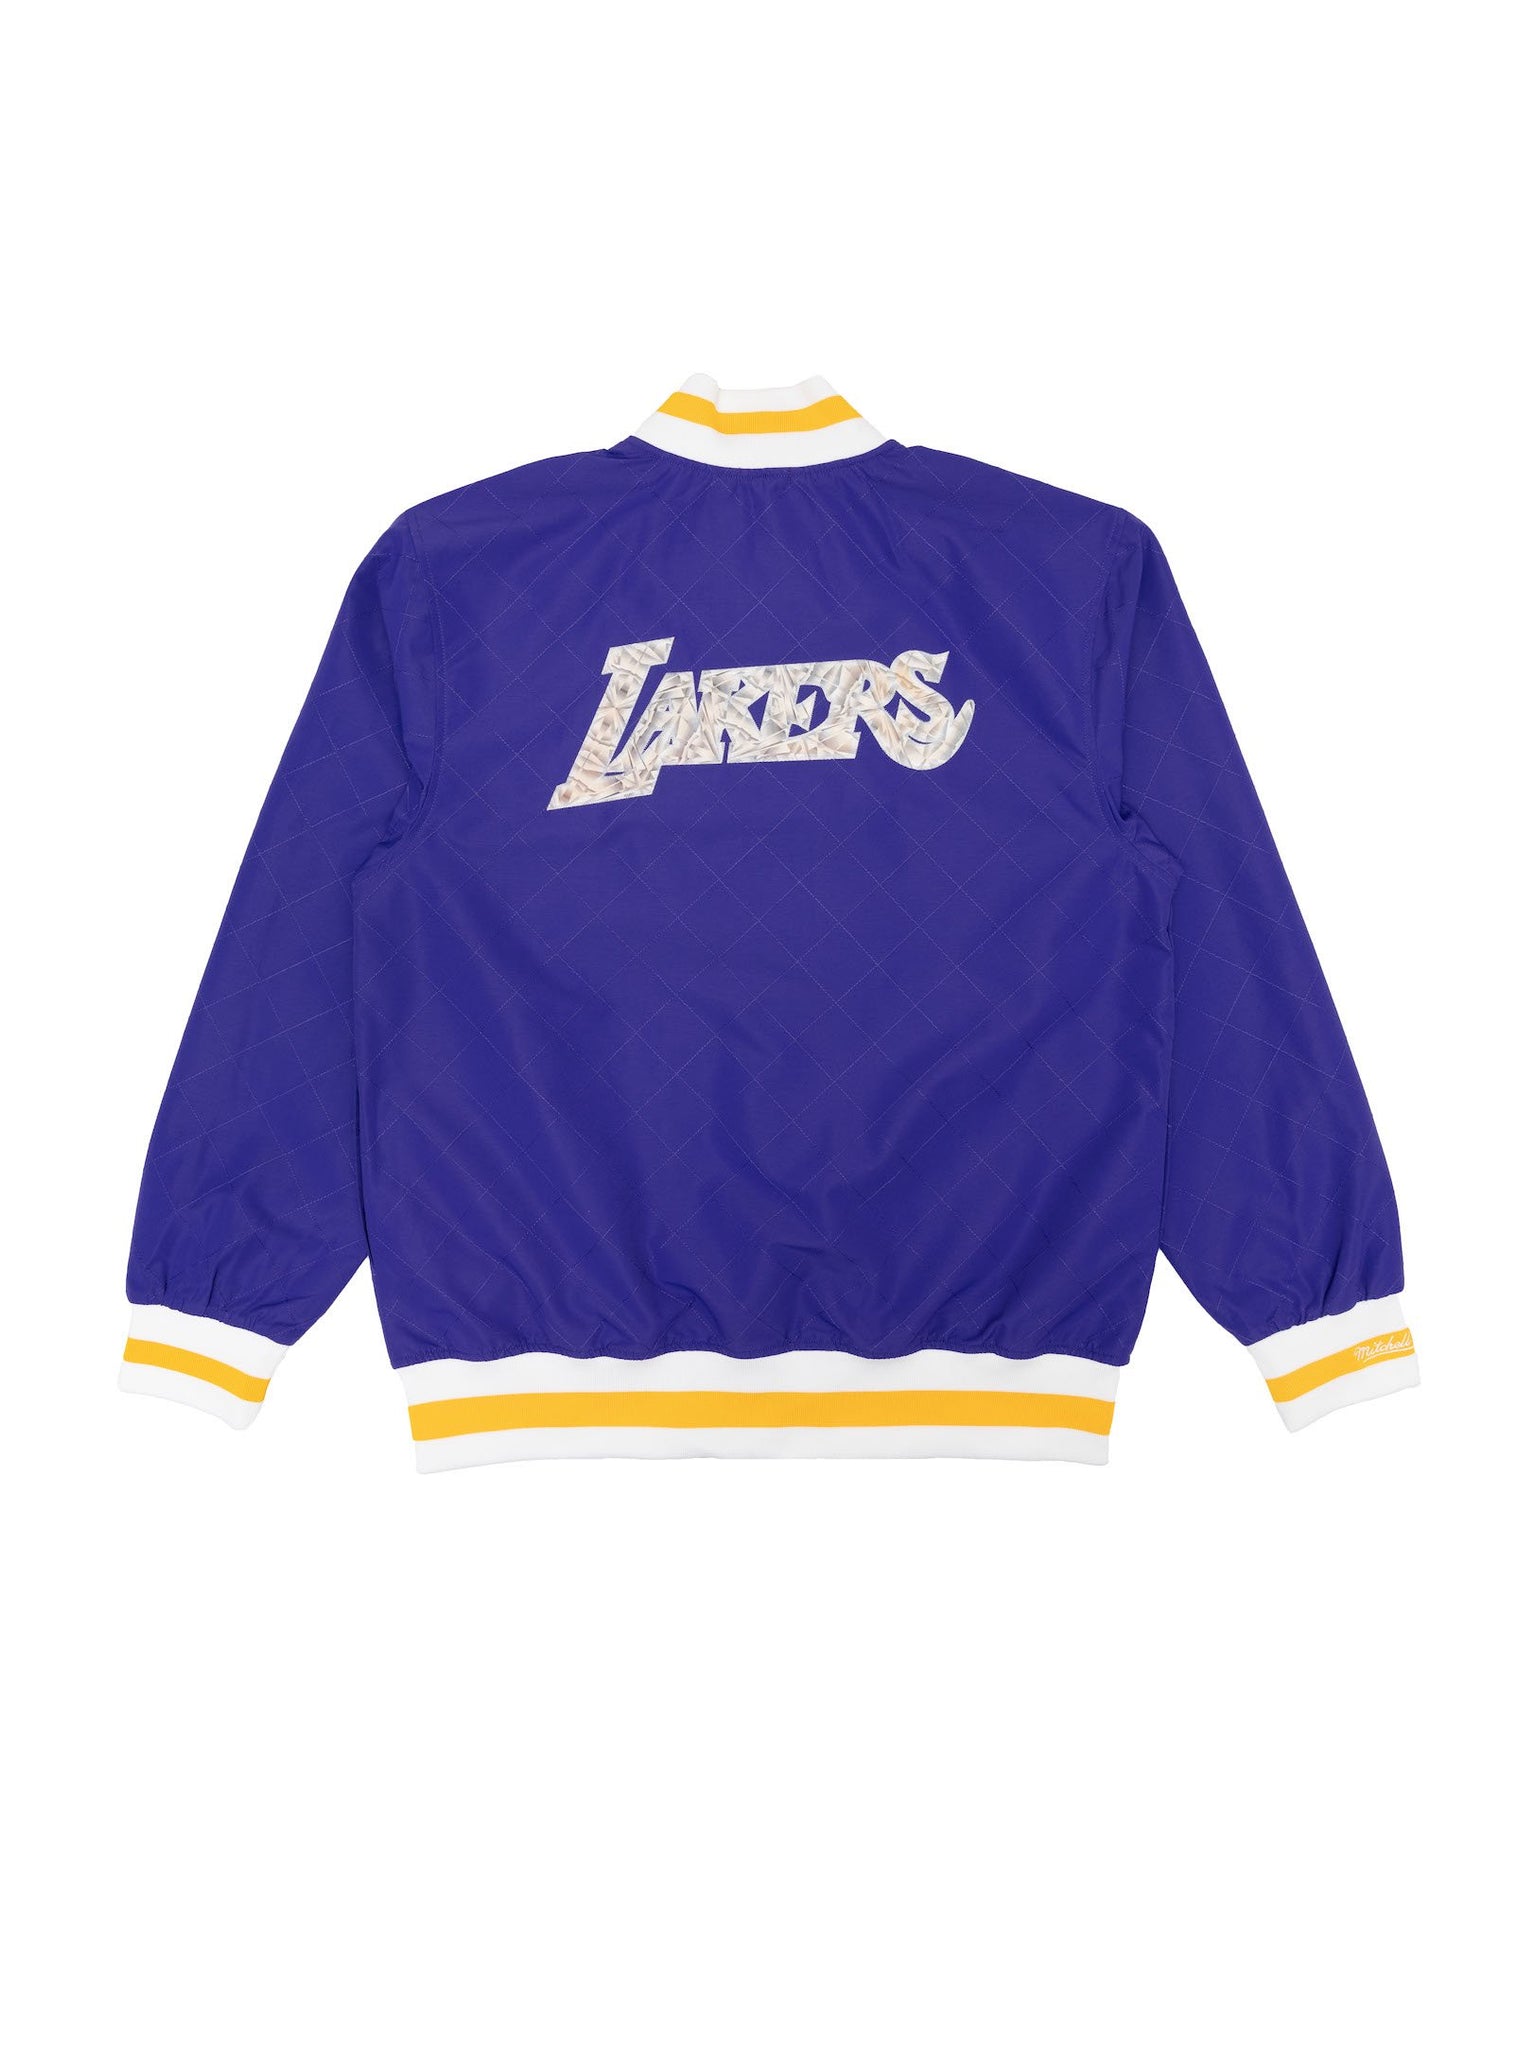 Los Angeles Lakers Jacket, Satin - All White, M/L Supreme